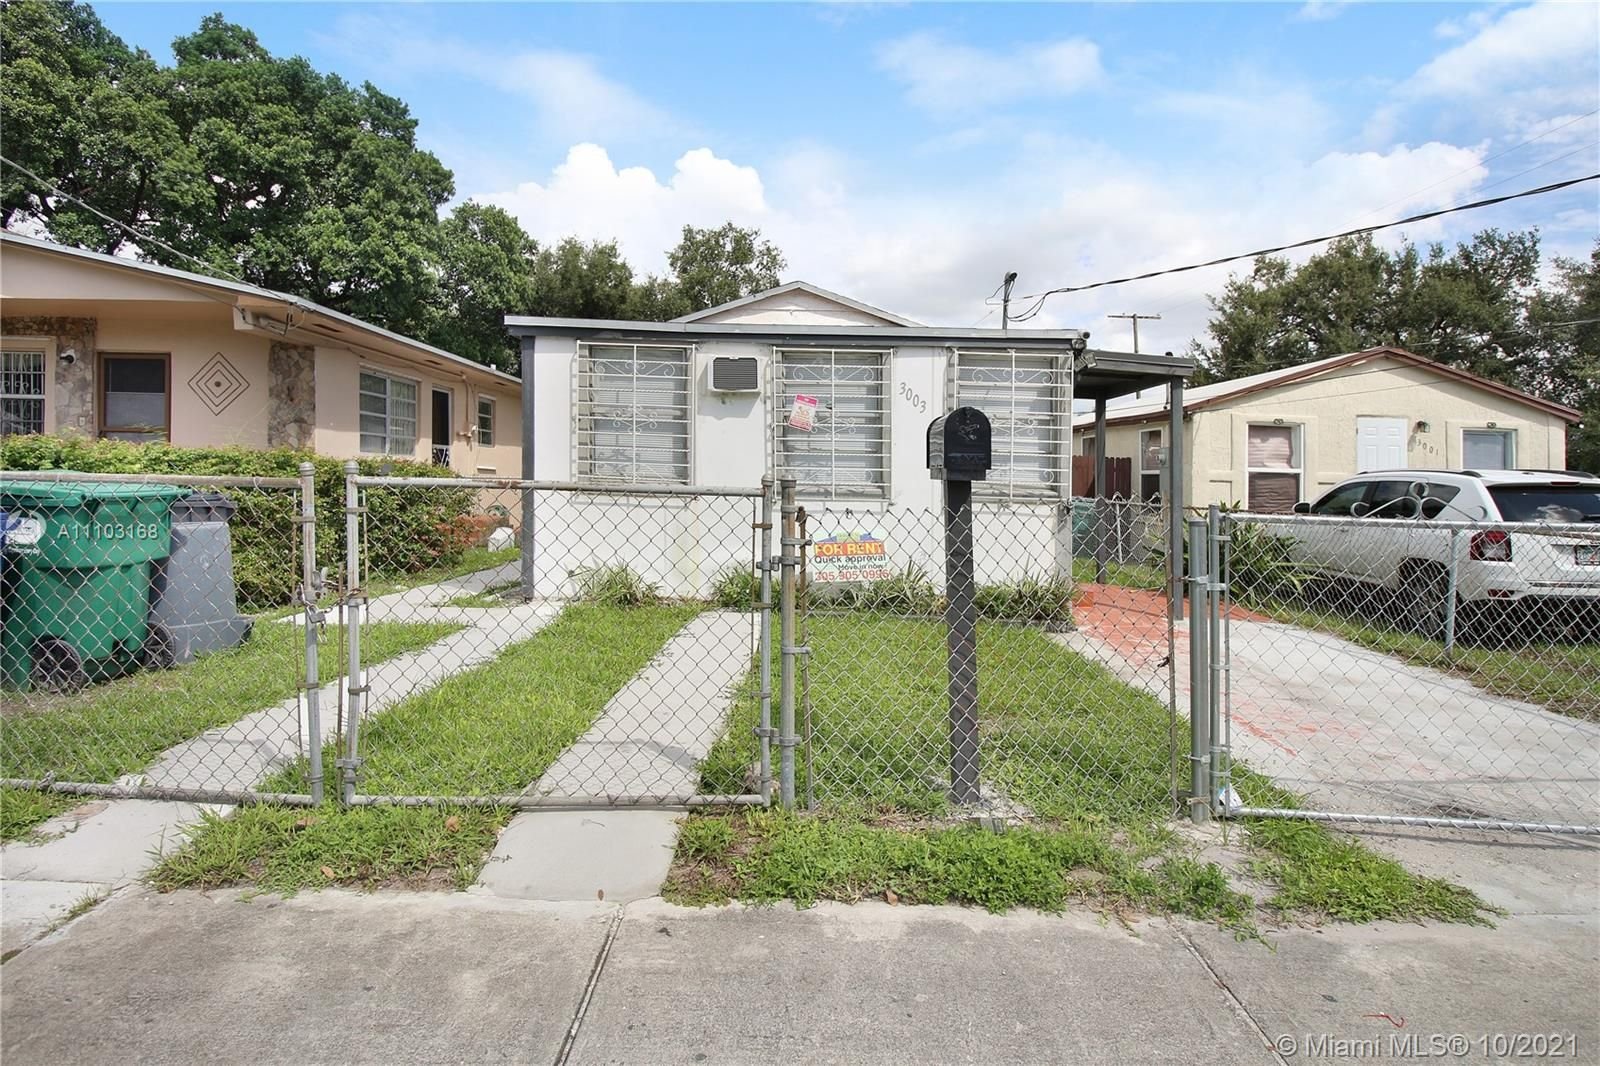 Real estate property located at 3003 45th St, Miami-Dade County, Miami, FL